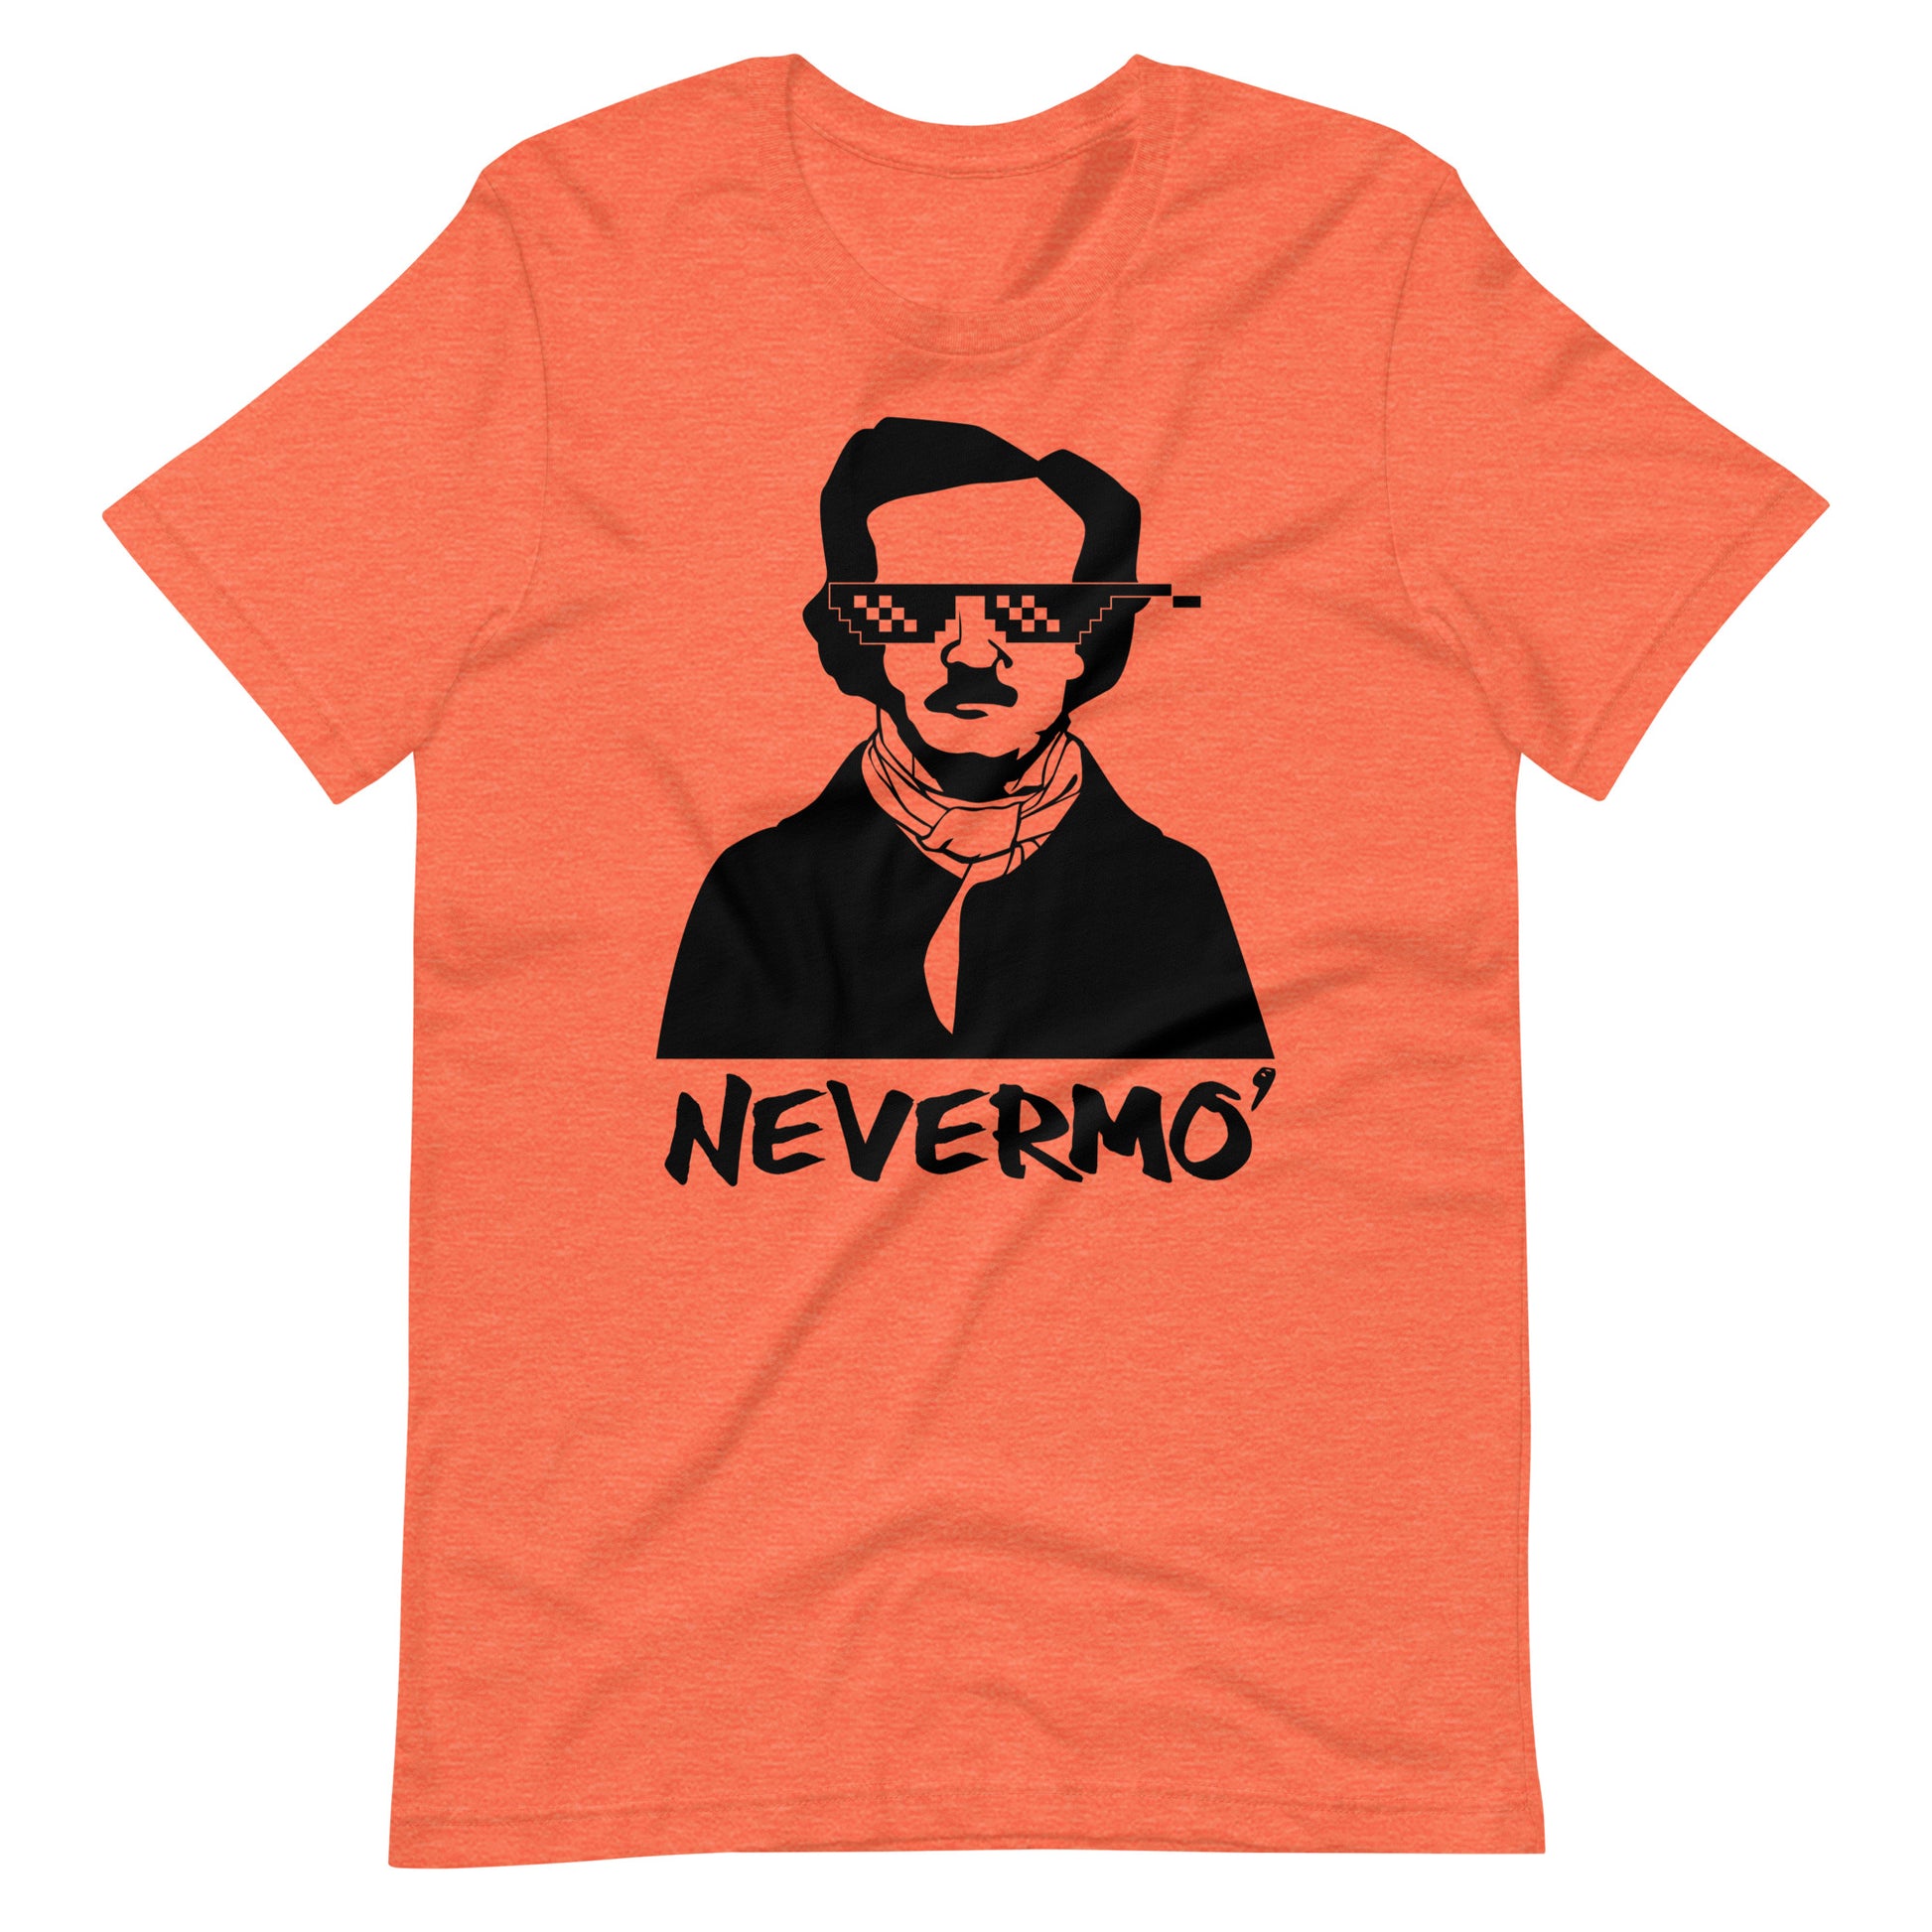 Women's Edgar Allan Poe "Nevermo" t-shirt - Heather Orange Front